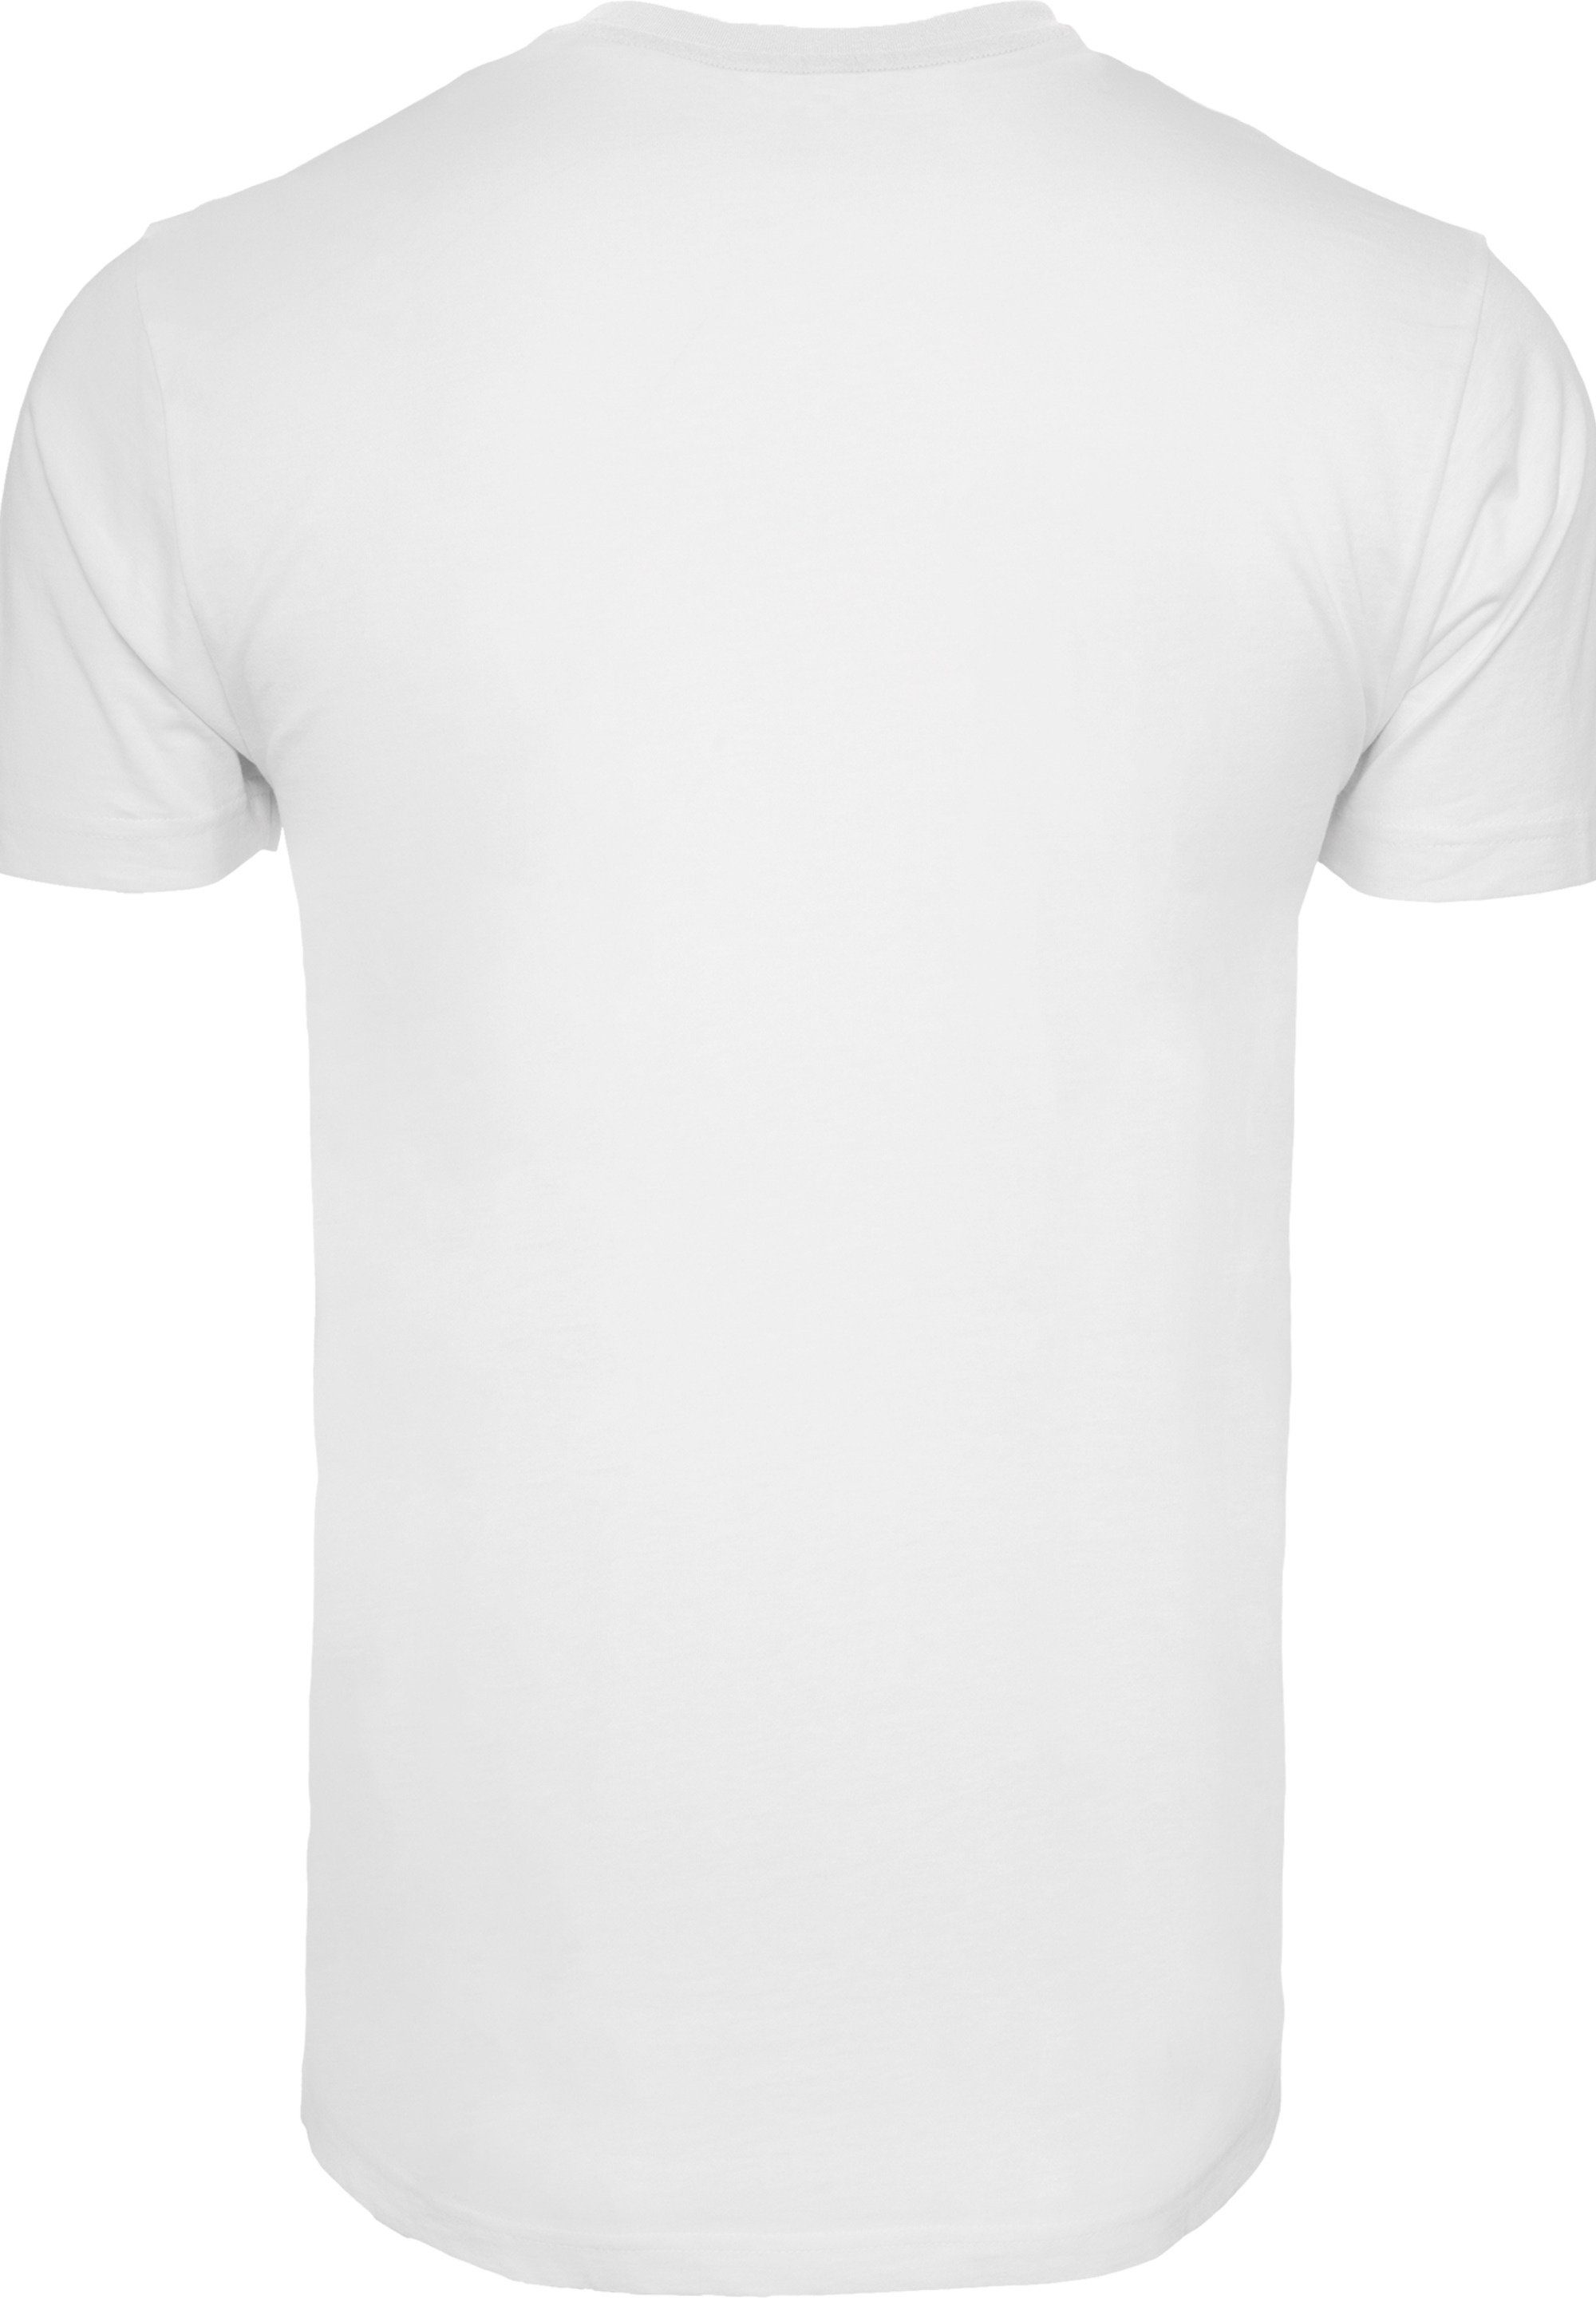 White Space Herren,Premium Classic Shuttle F4NT4STIC T-Shirt ,Regular-Fit,Basic,Bedruckt NASA Merch